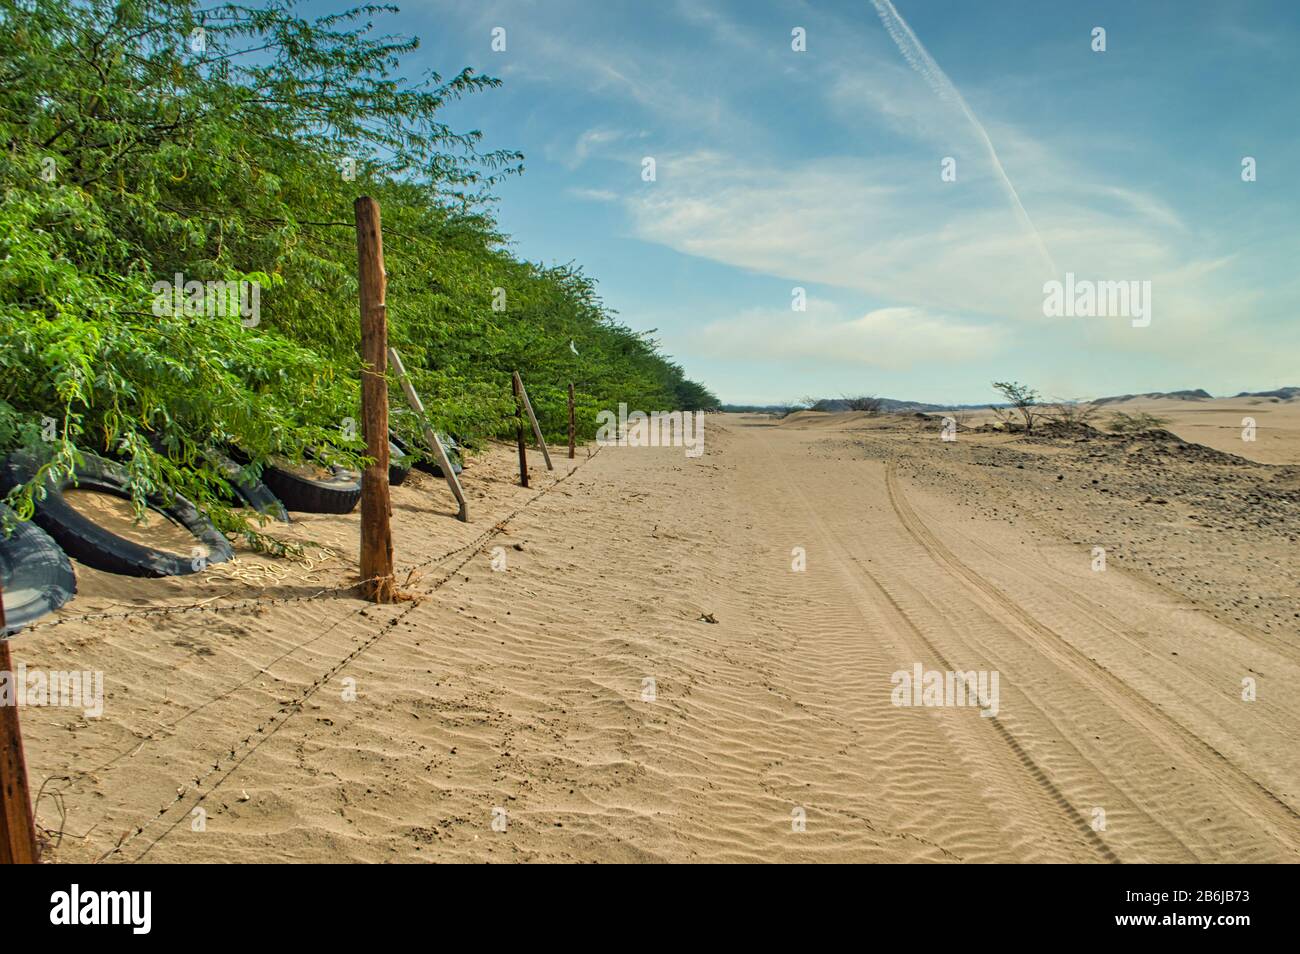 Saudi Arabian desert and desert life Stock Photo